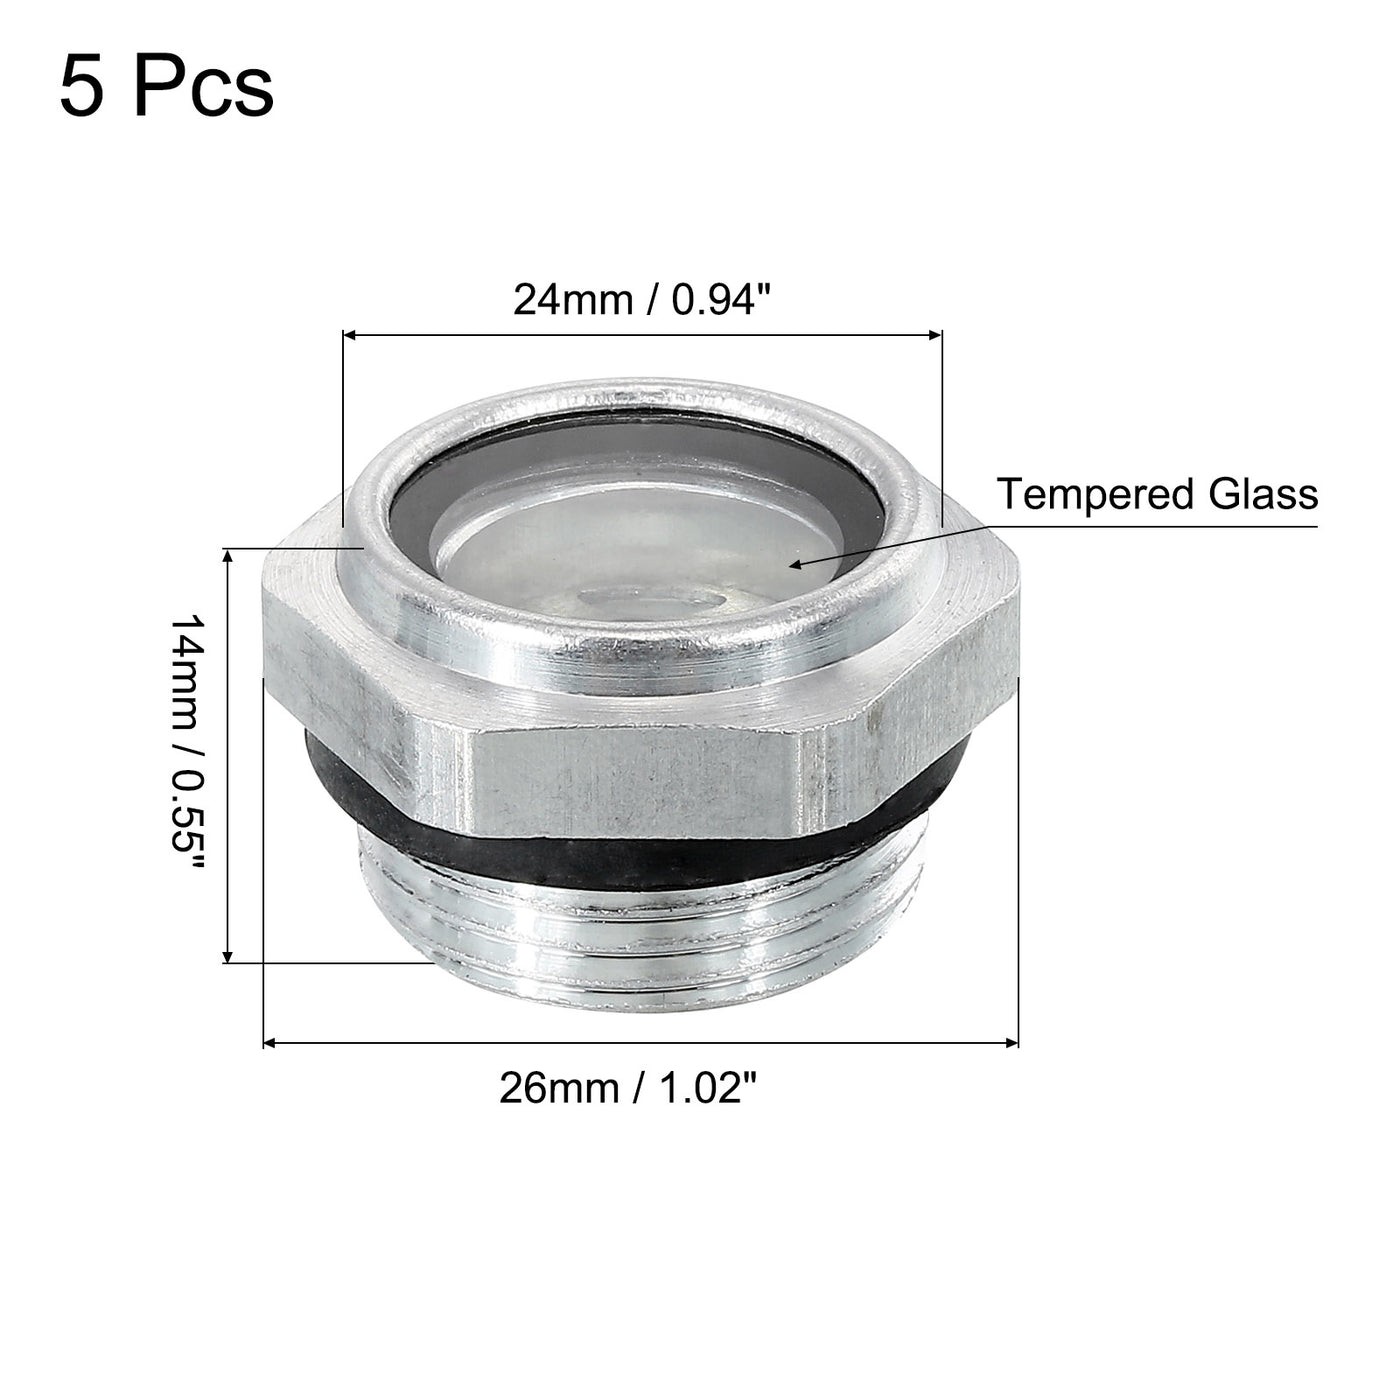 Uxcell Uxcell Air Compressor Oil Level Gauge Sight Glass M22x1.5mm Male Thread Aluminum 5Pcs